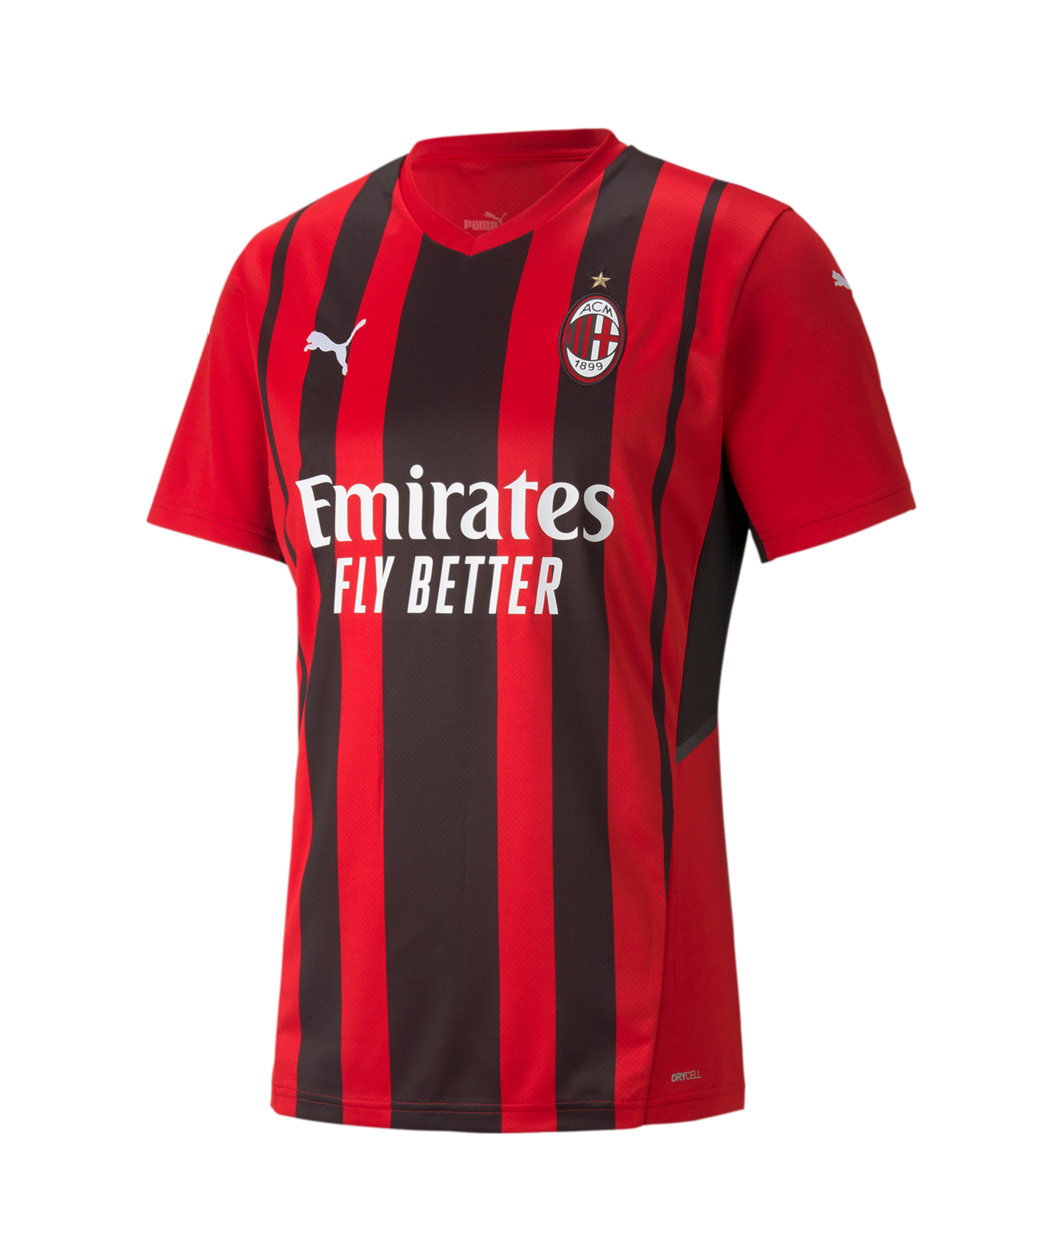 Puma AC Milan Adult Home Shirt Jersey 21/22 759122 01 RED/BLACK